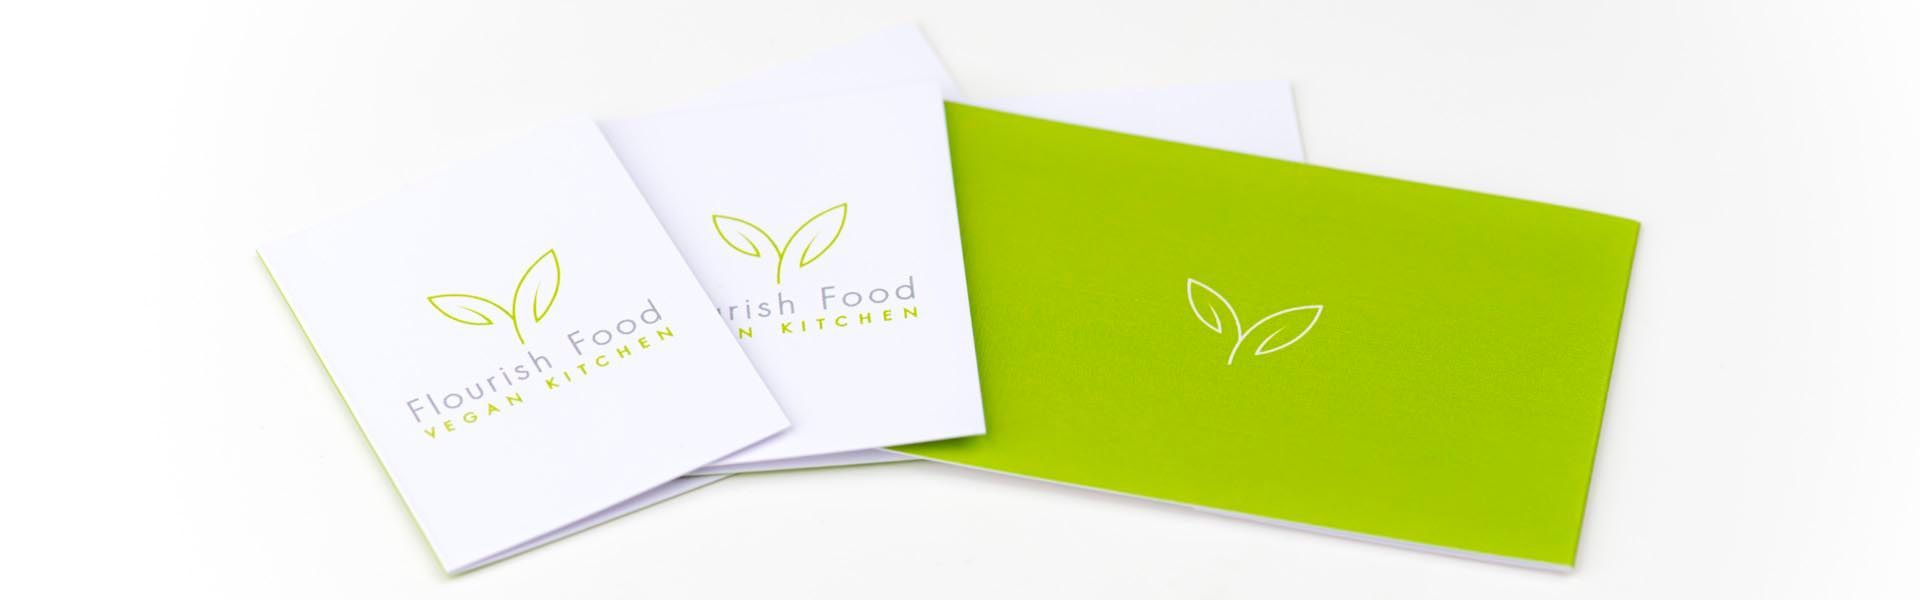 three brochures for flourish food vegan kitchen